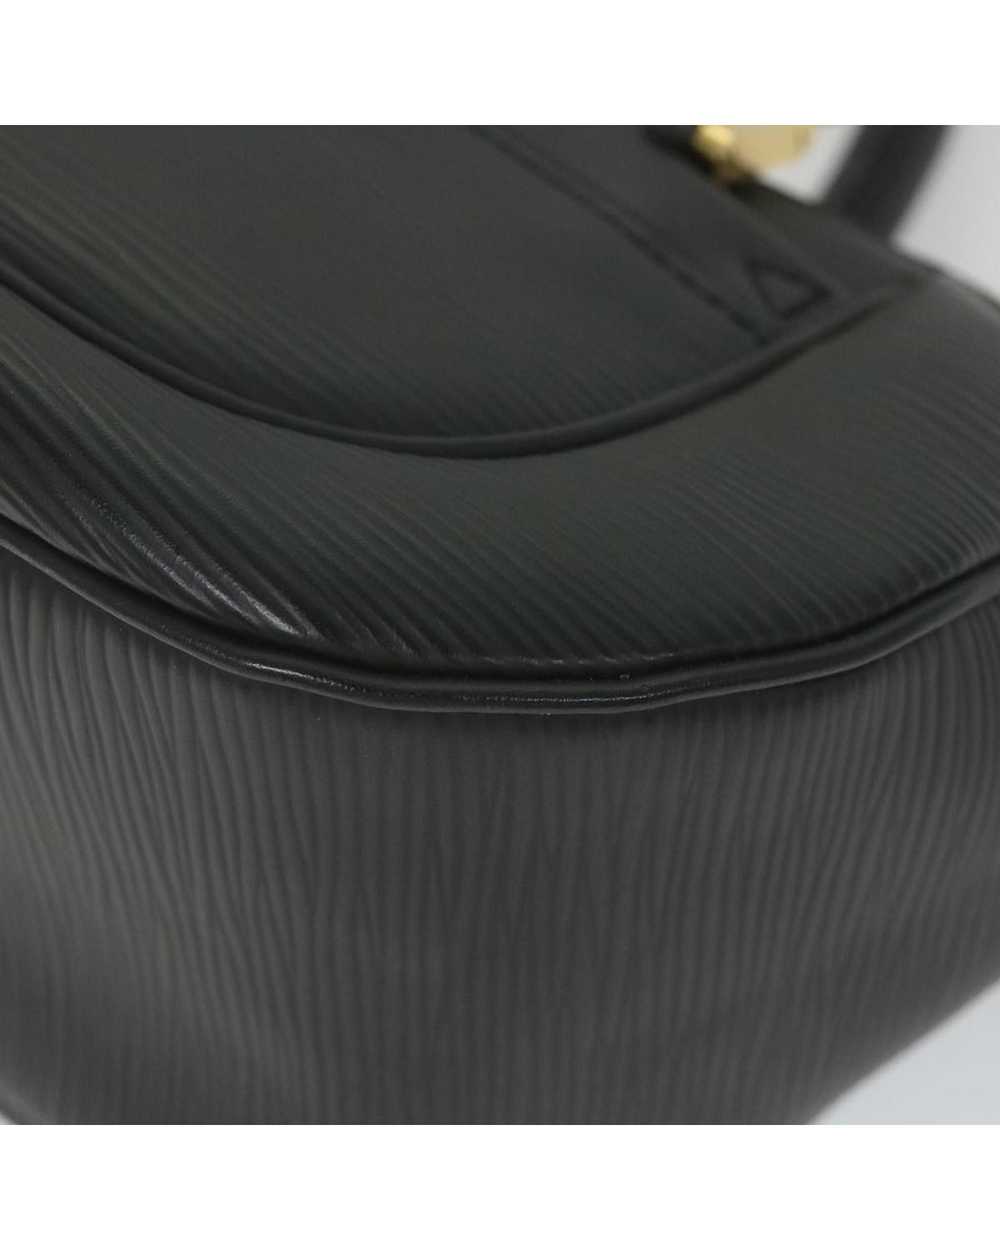 Louis Vuitton Black Leather Handbag with Elegant … - image 10